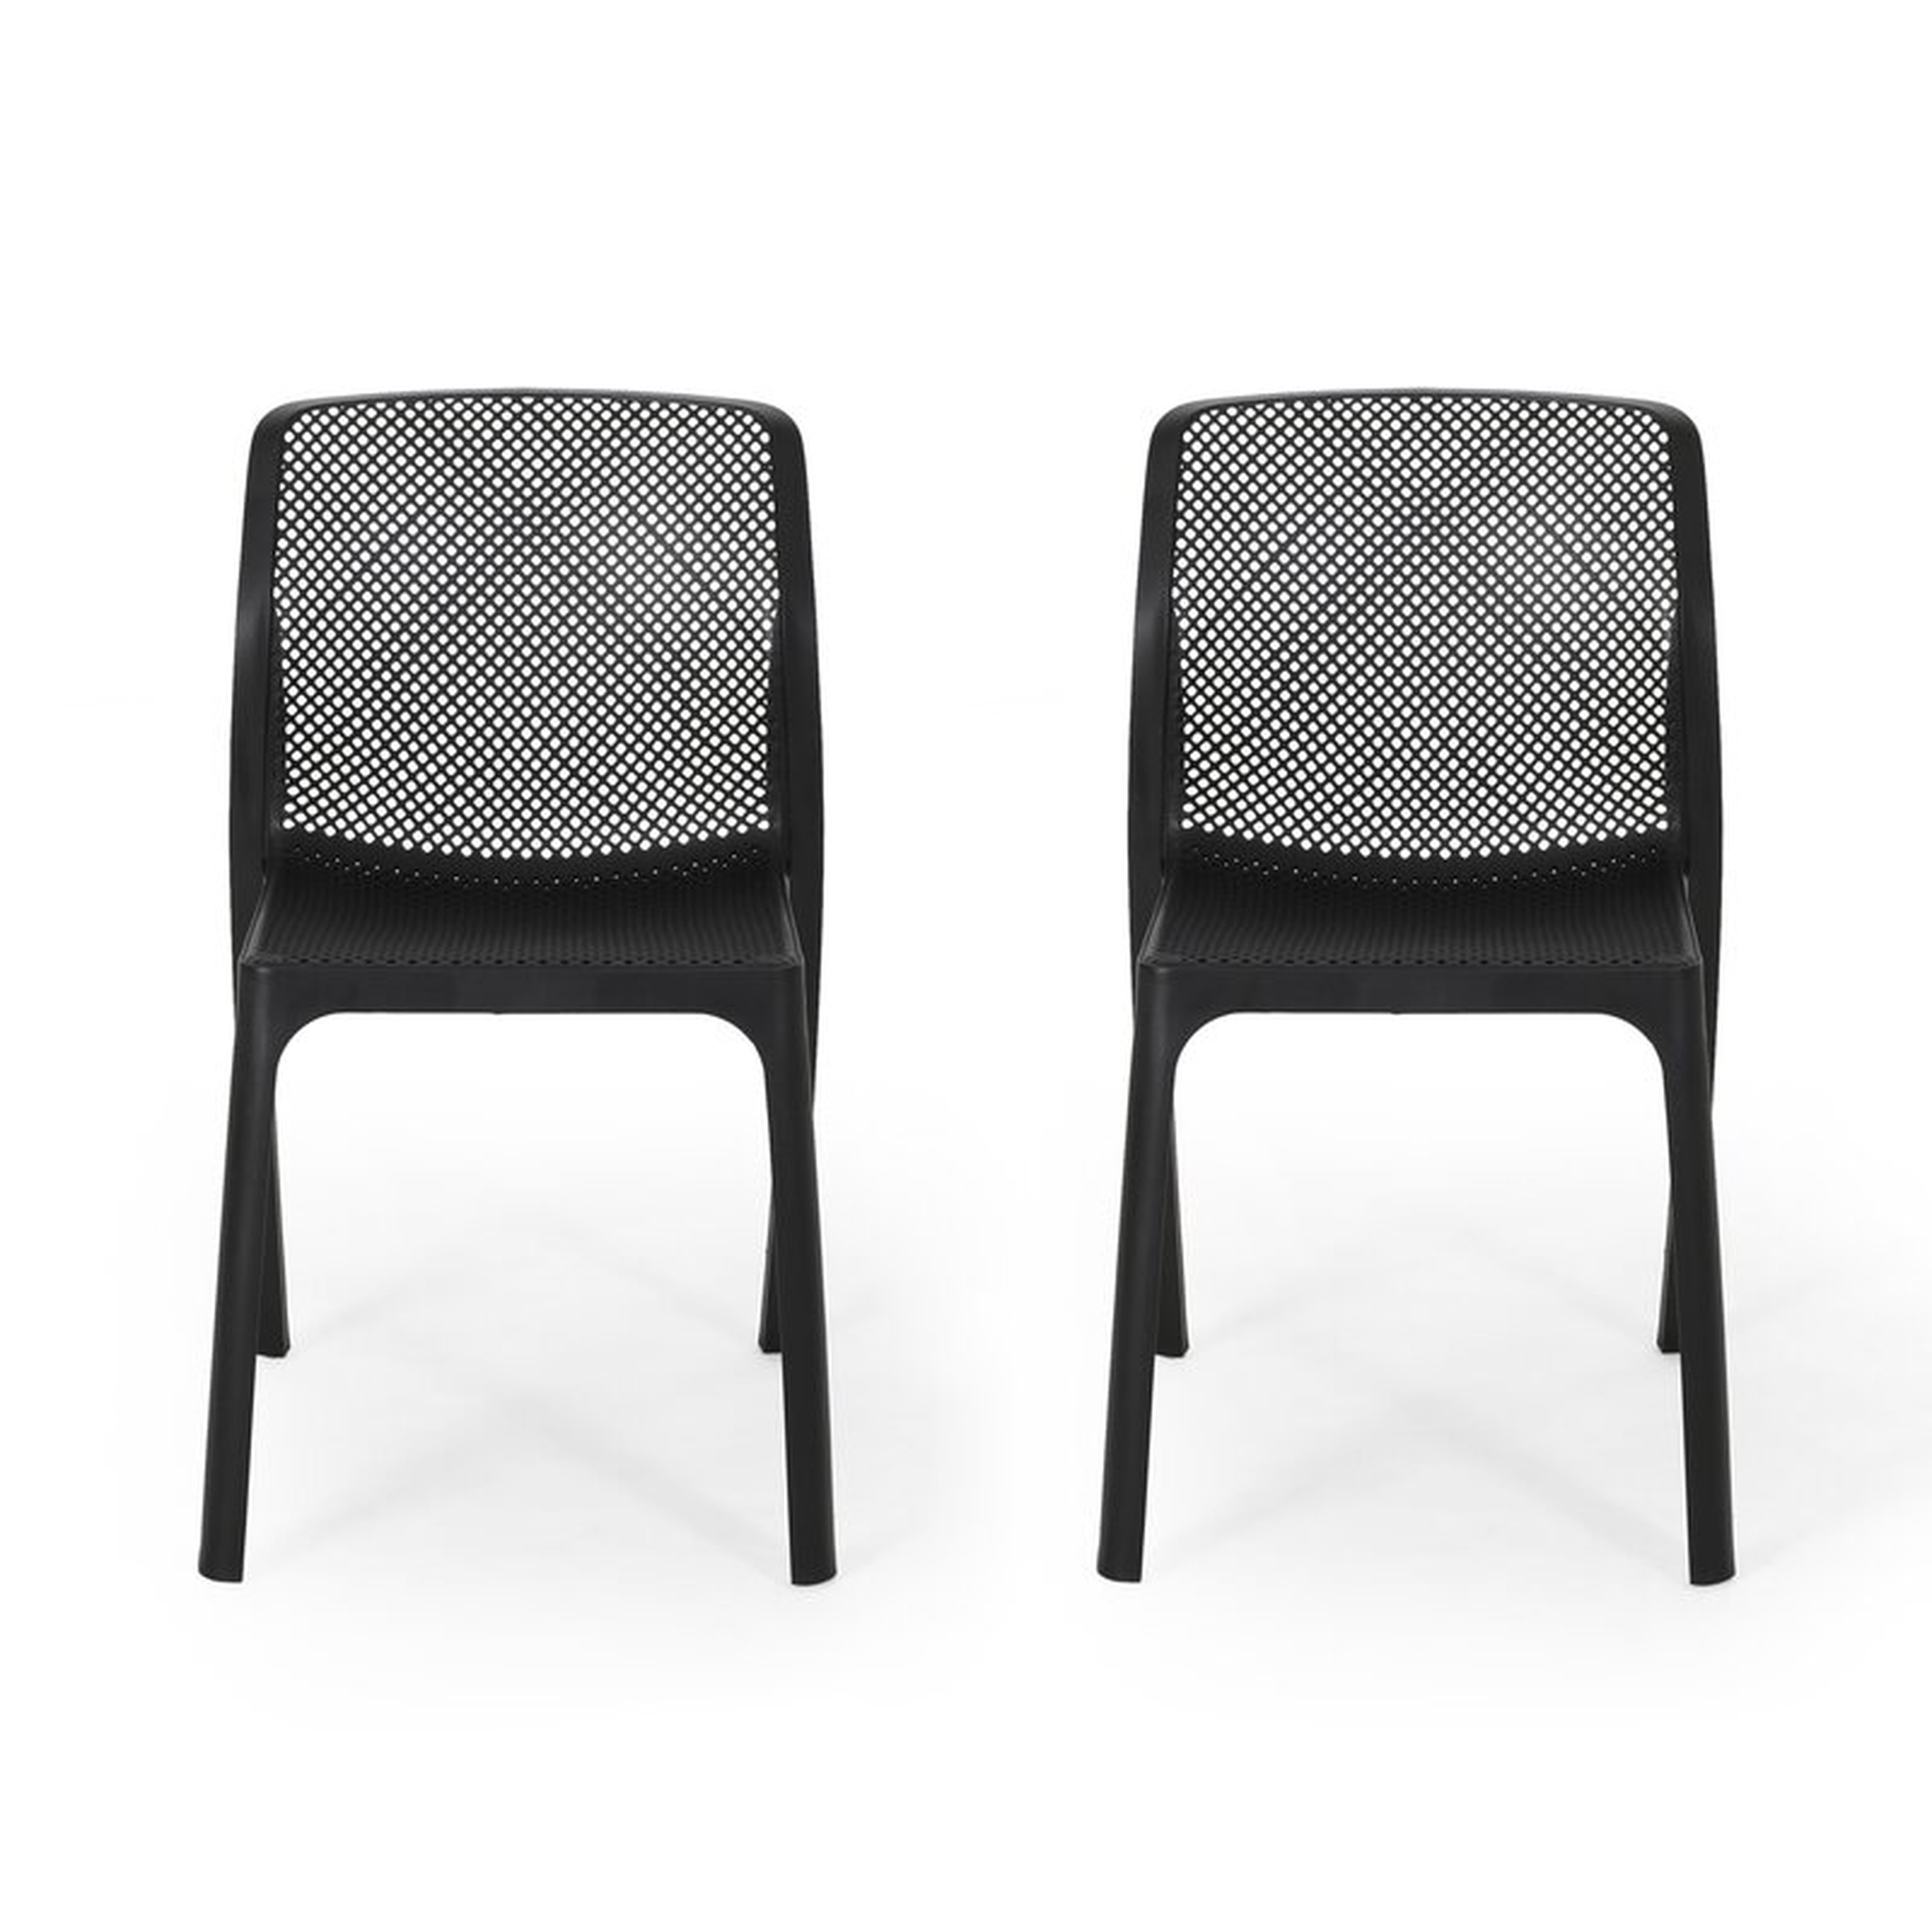 Tomalin Outdoor Stacking Patio Dining Chair (Set of 2), Black - Wayfair